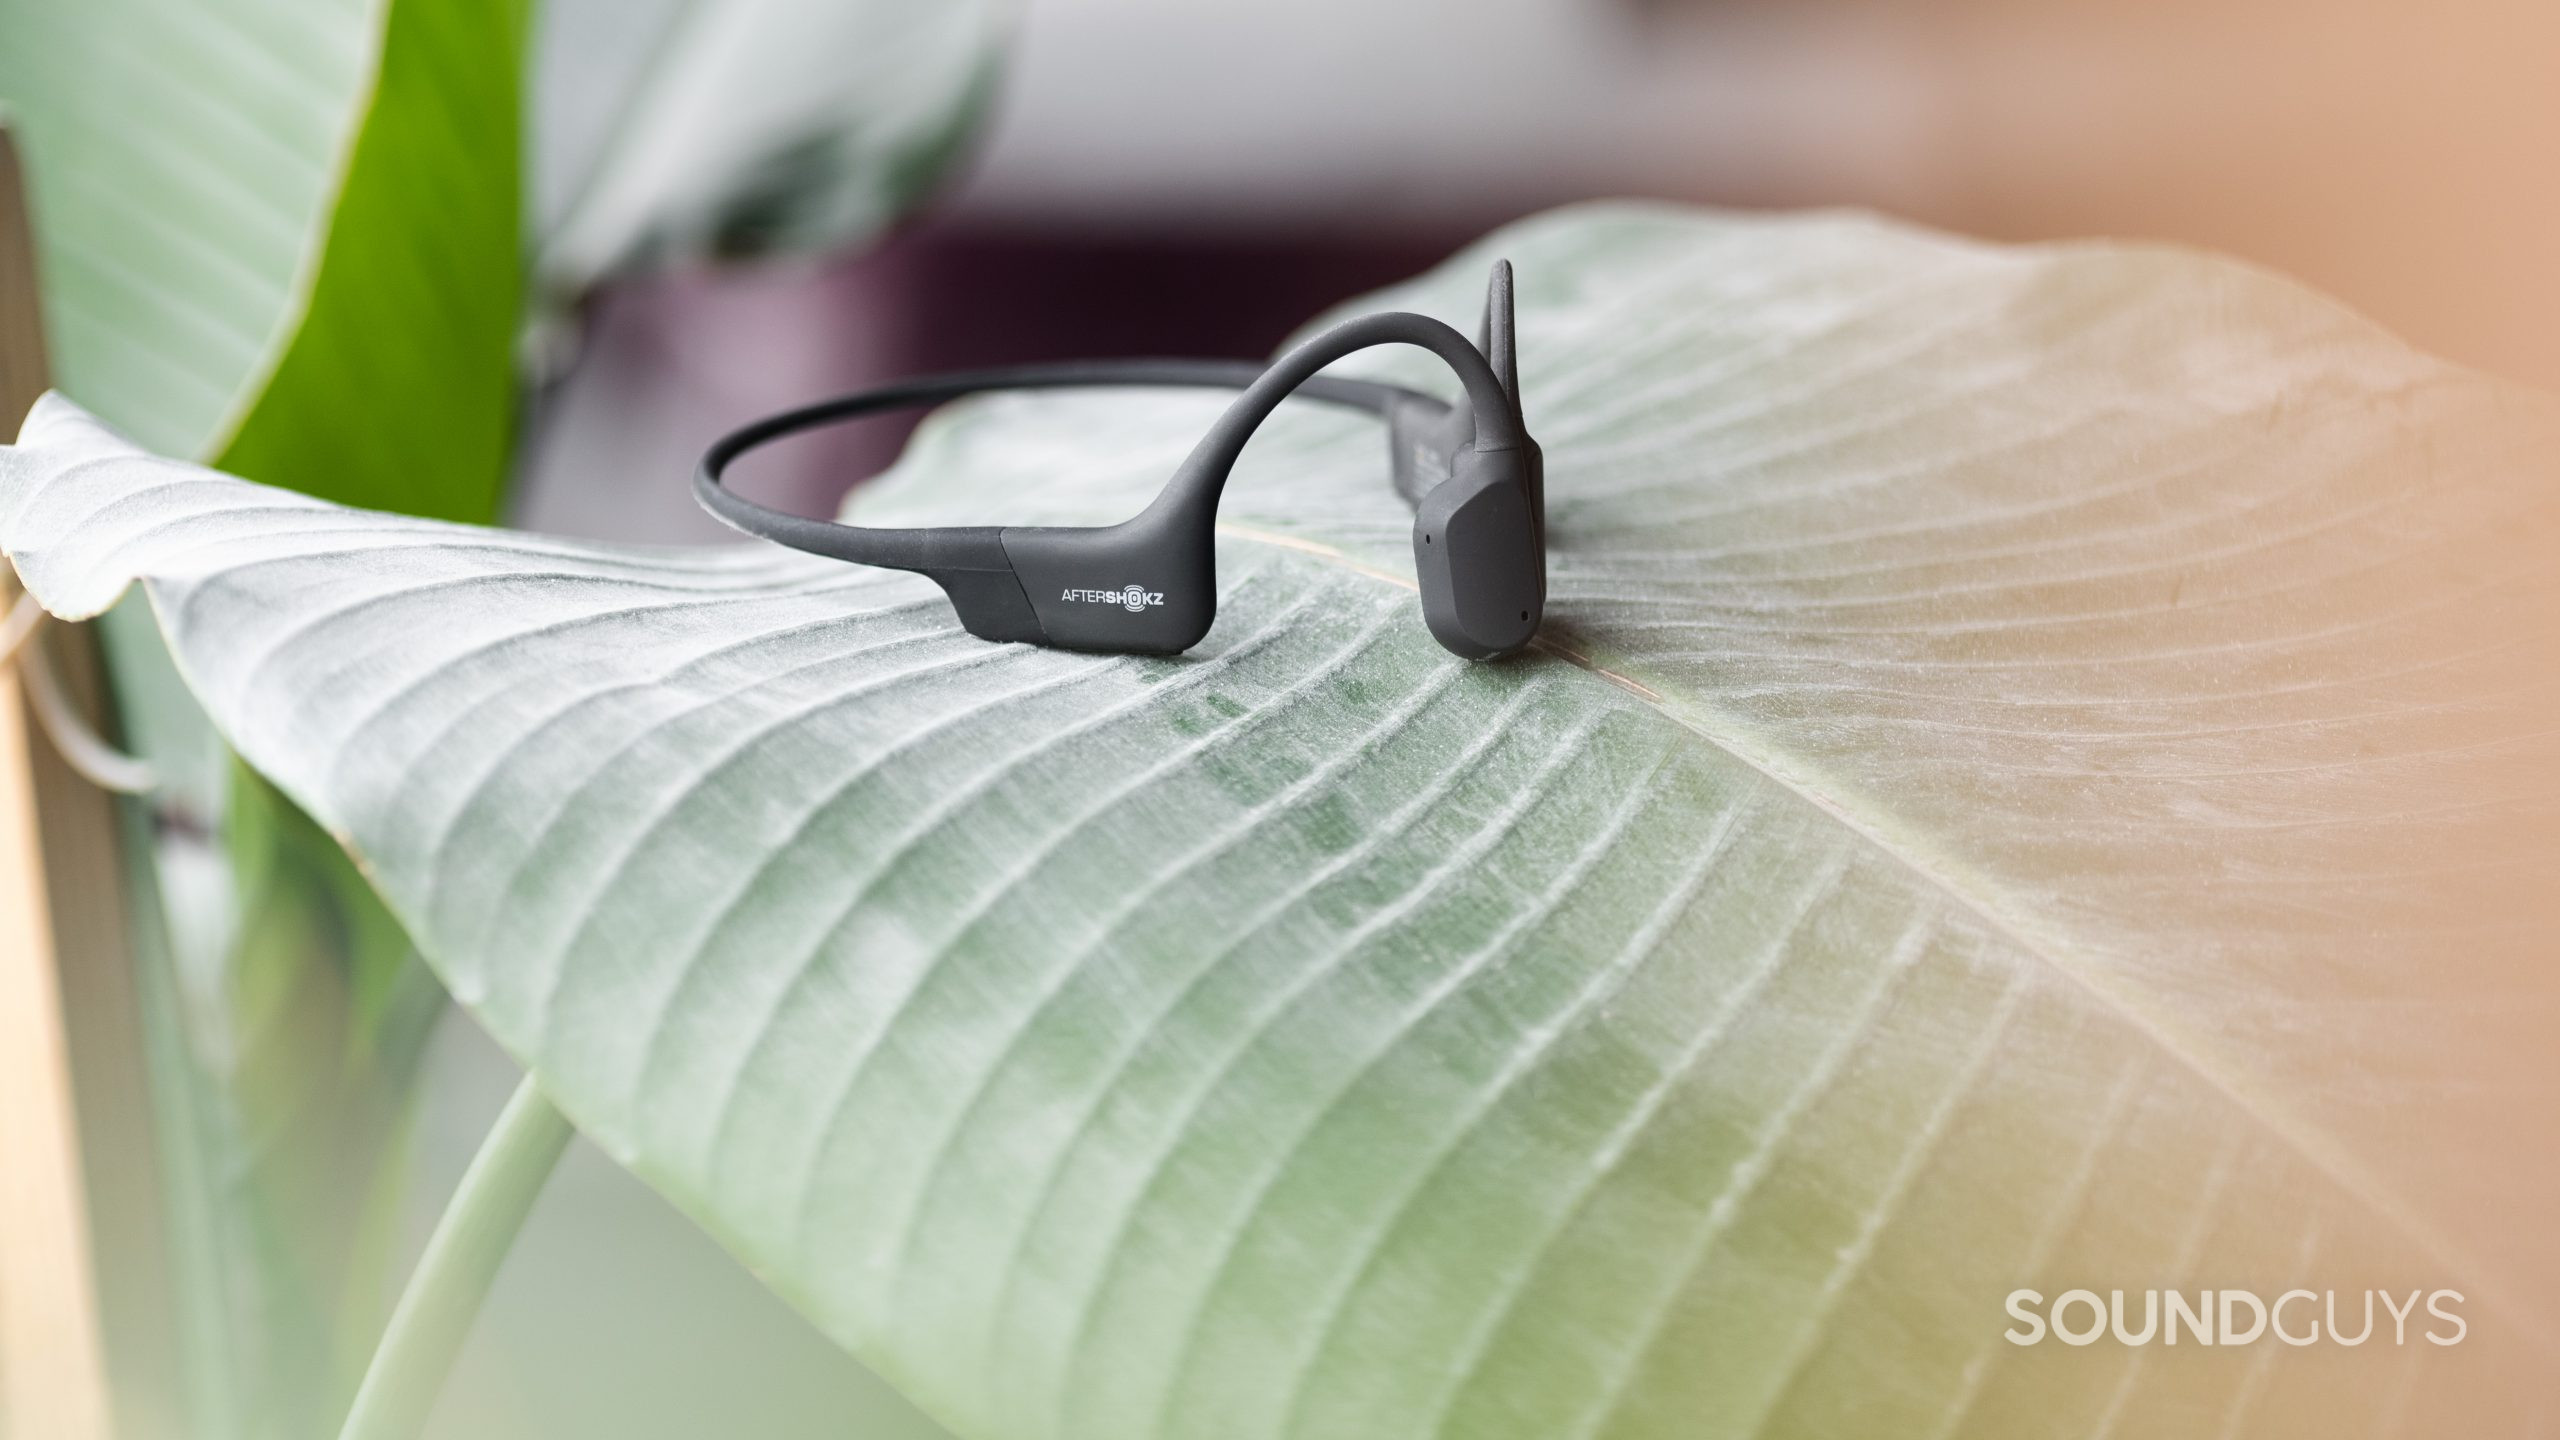 The Aftershokz Aeropex bone conduction headphones rest on a large leaf fond.